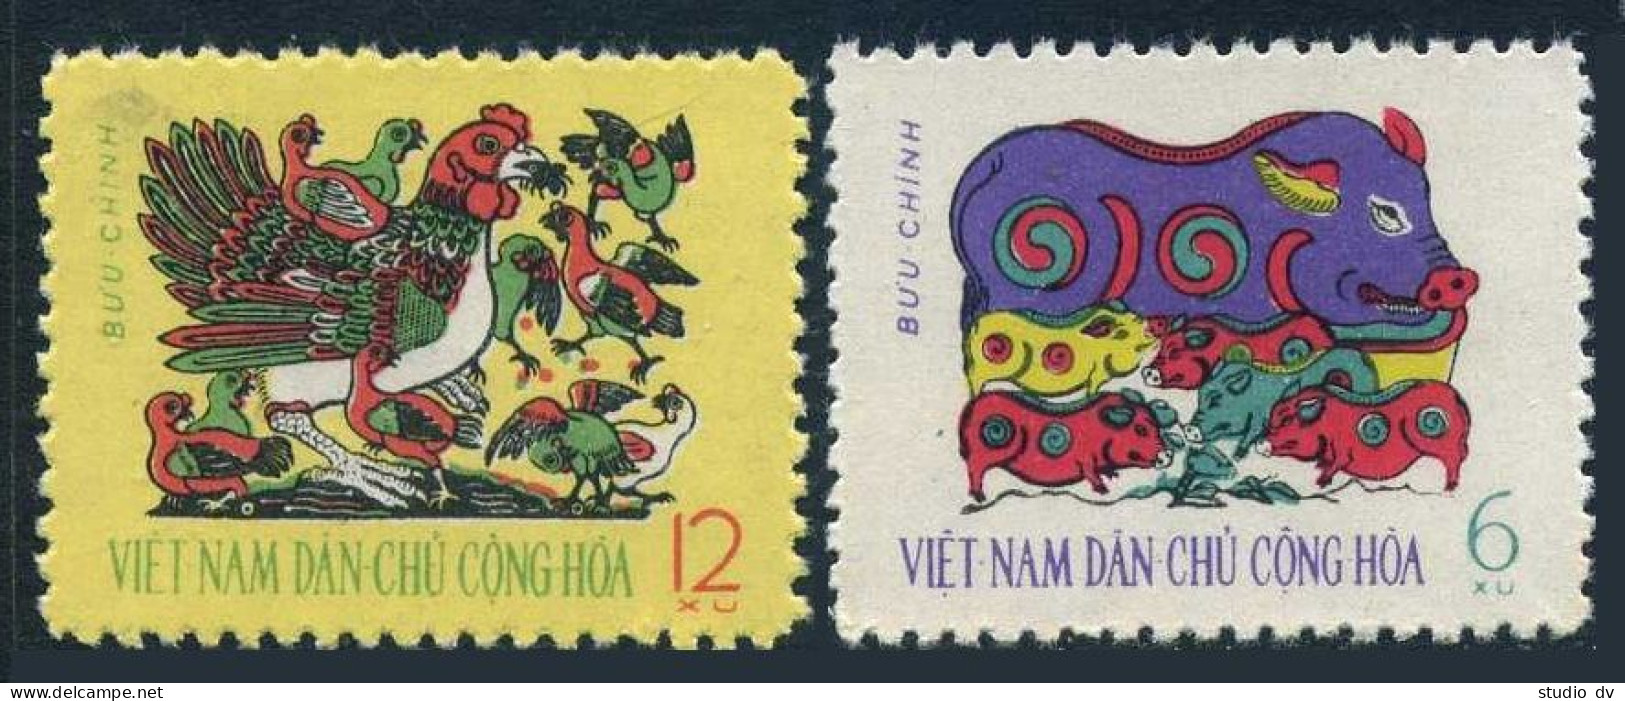 Viet Nam 186-187,MNH.Michel 192-193. Tet Holiday,1962.Sow,piglets,Poultry. - Viêt-Nam